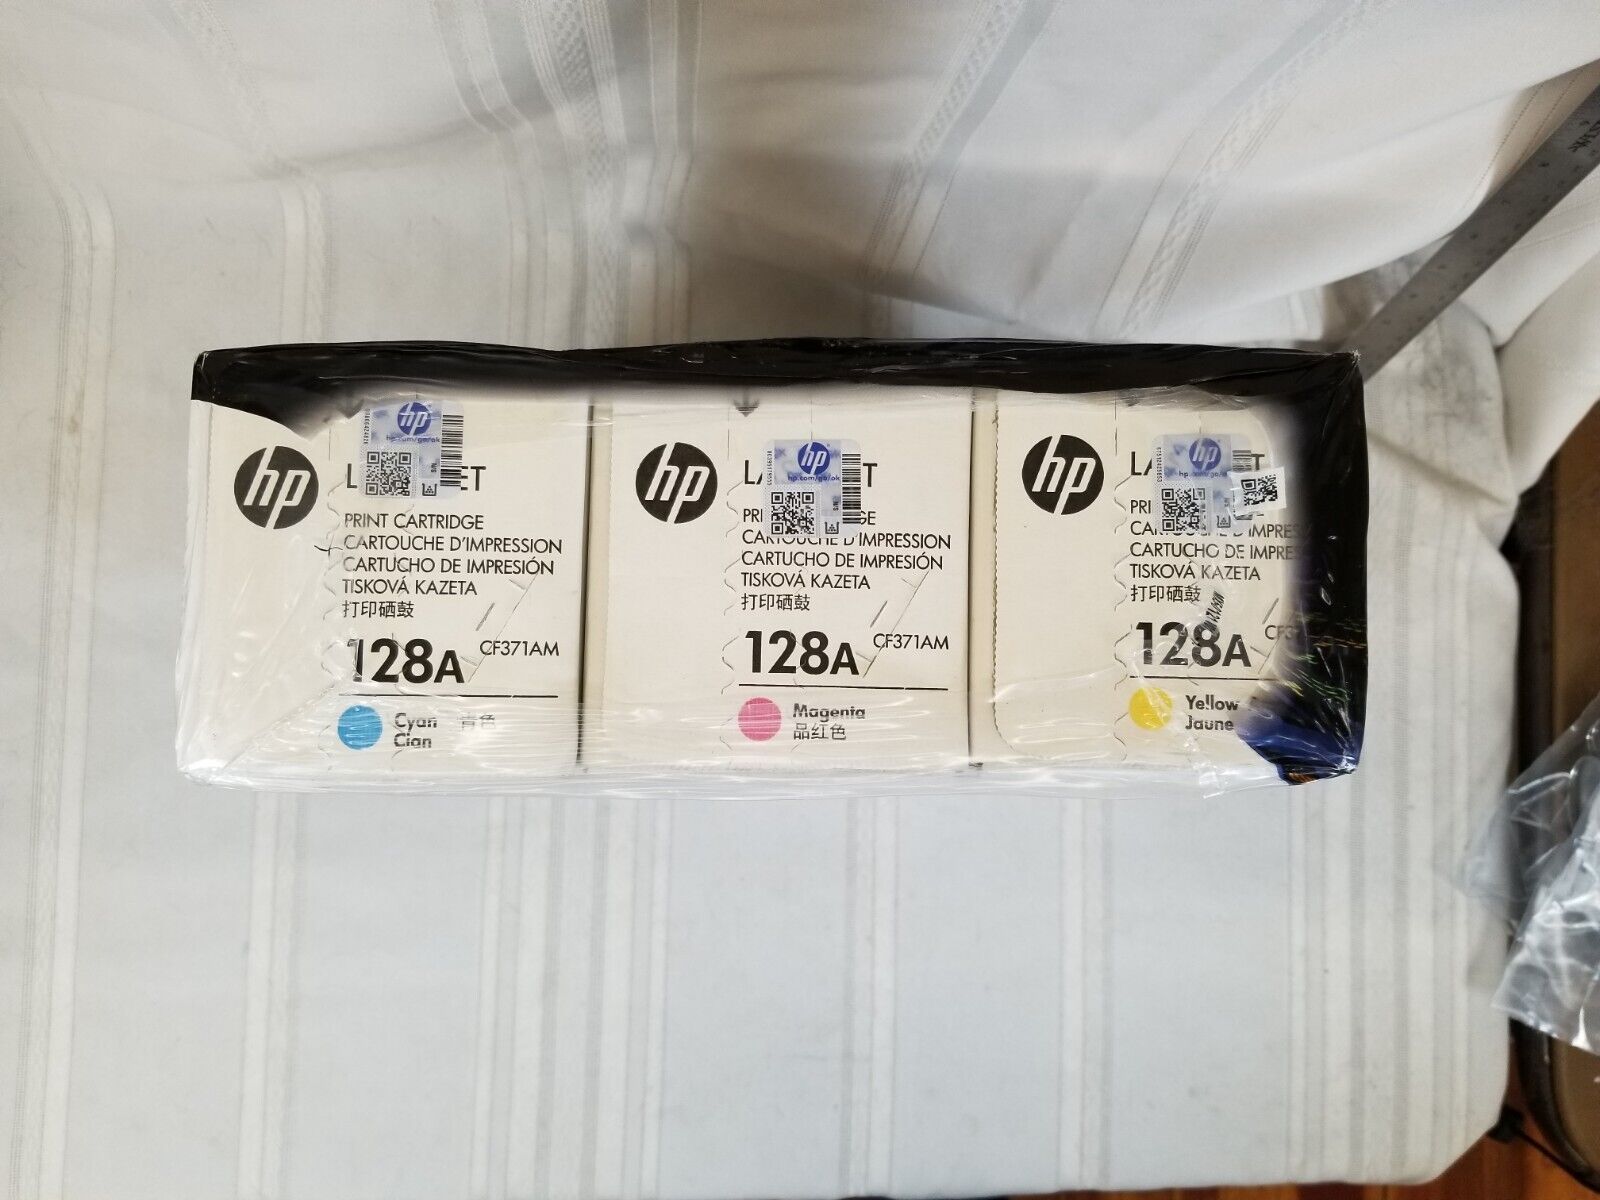 HP LaserJet ink toner 128A  cyan, magenta, & yellow. New Unopened